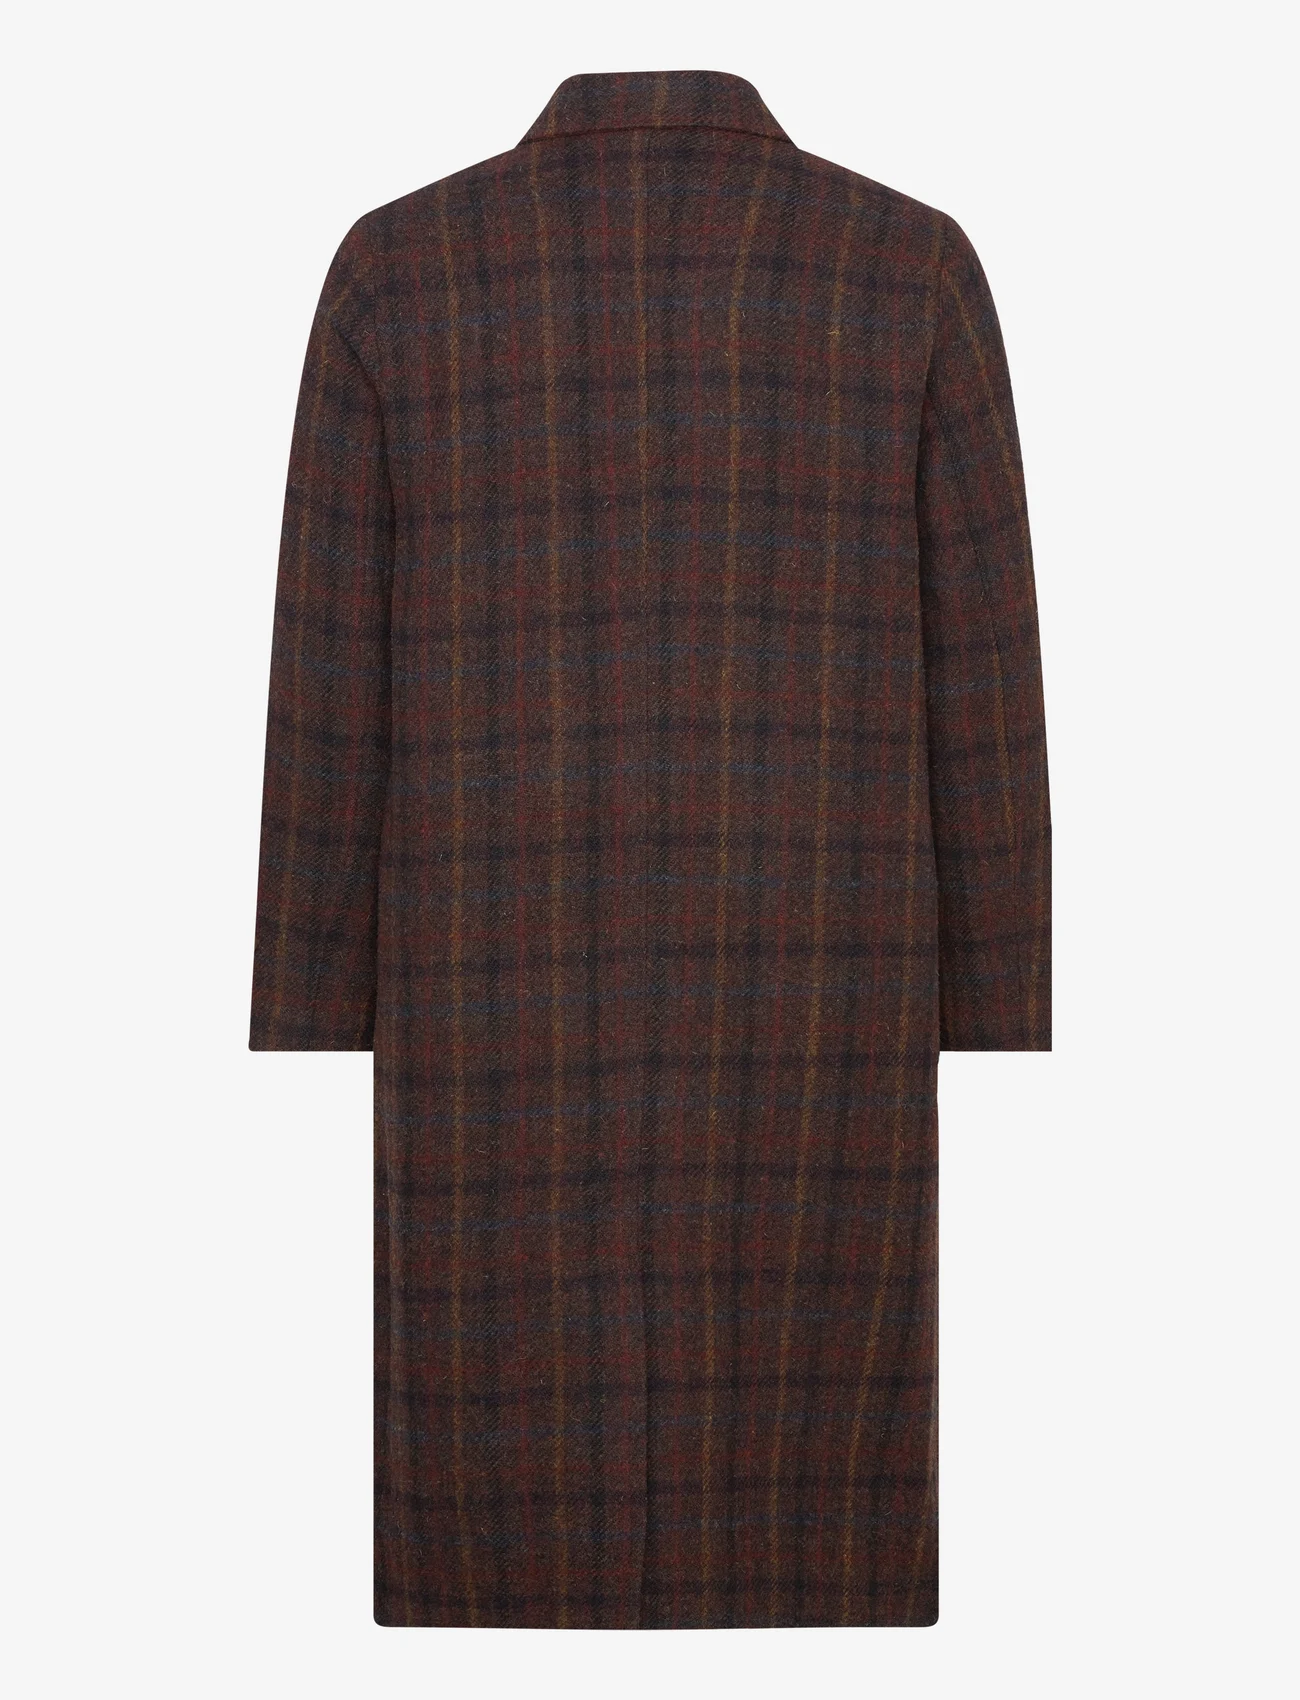 Les Deux - Maximilian Harris Tweed Wool Coat - winter jackets - ebony brown/black - 1